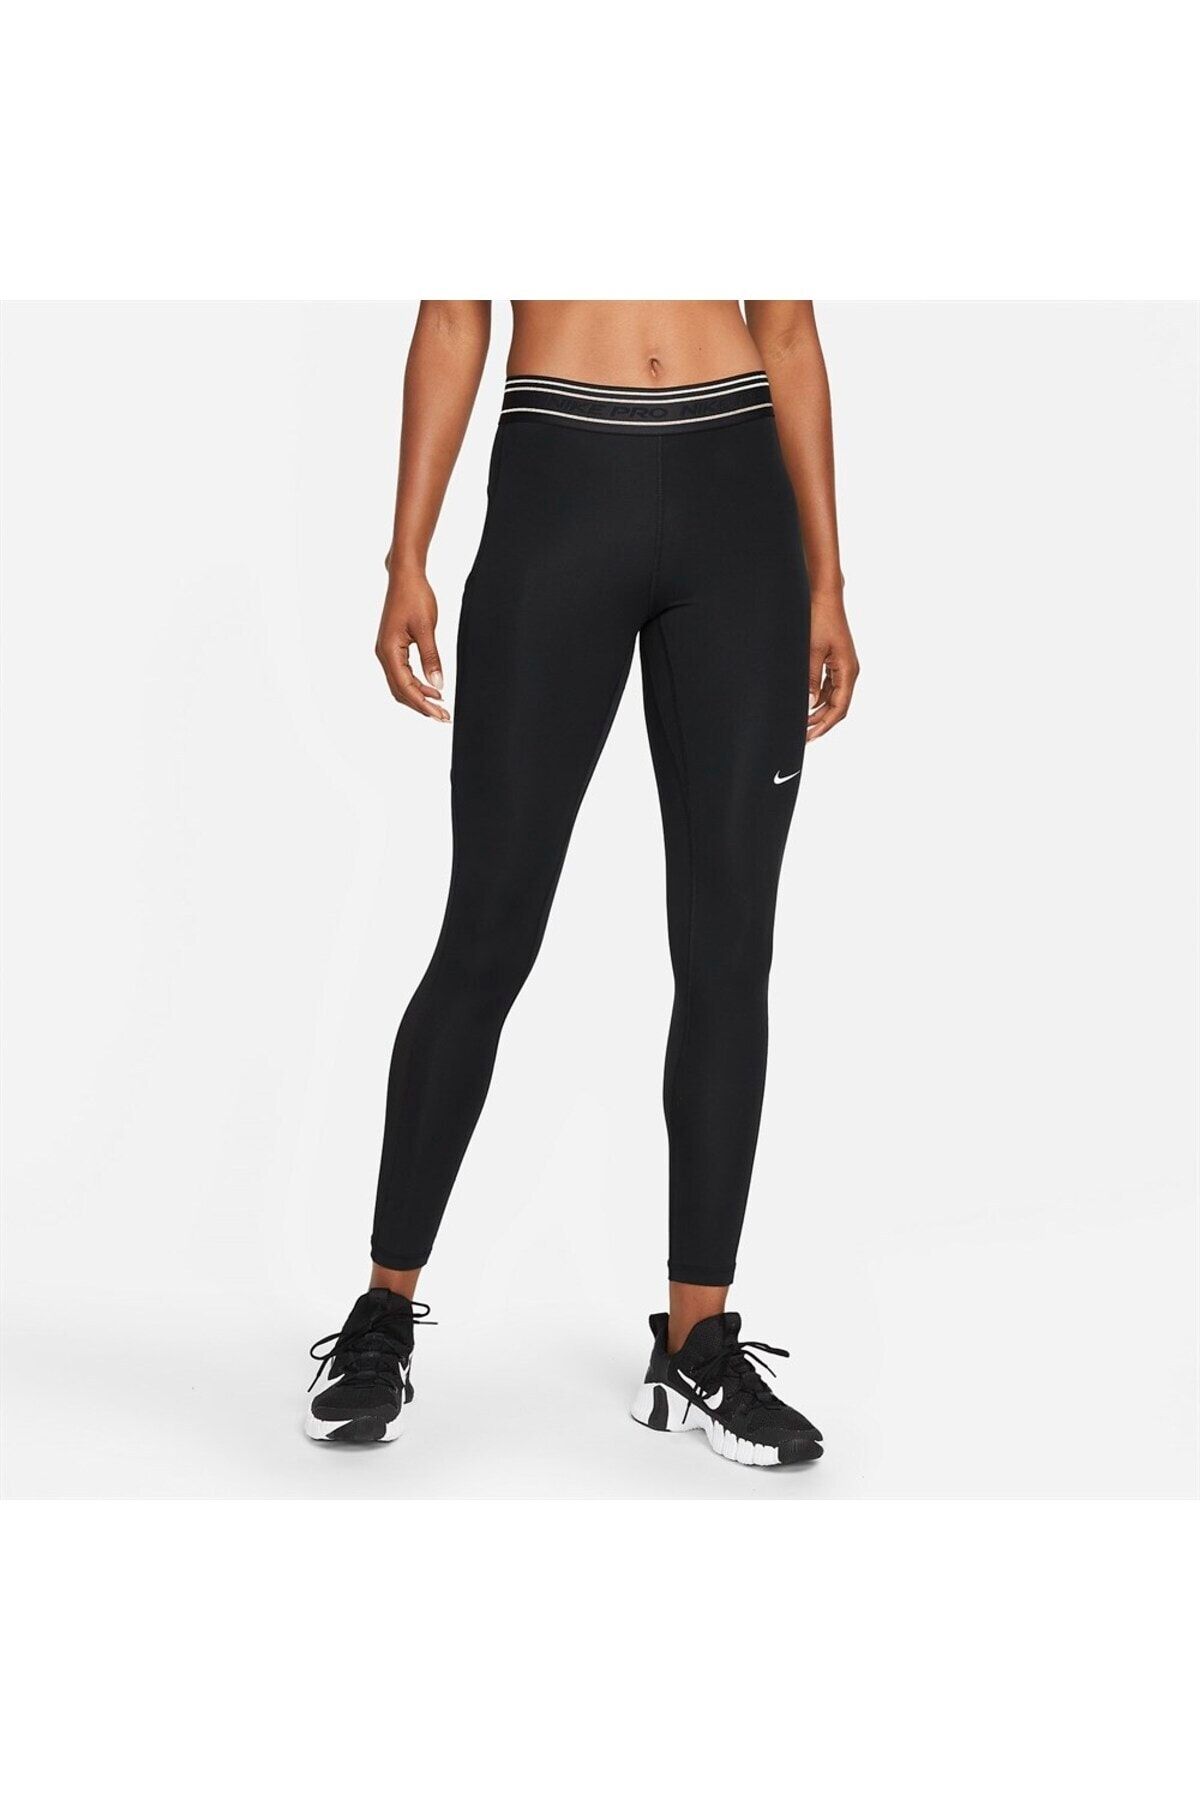 Nike Pro 365 Mid-rise 7/8 Training Legging Tight Fit Pink Leggings -  Trendyol